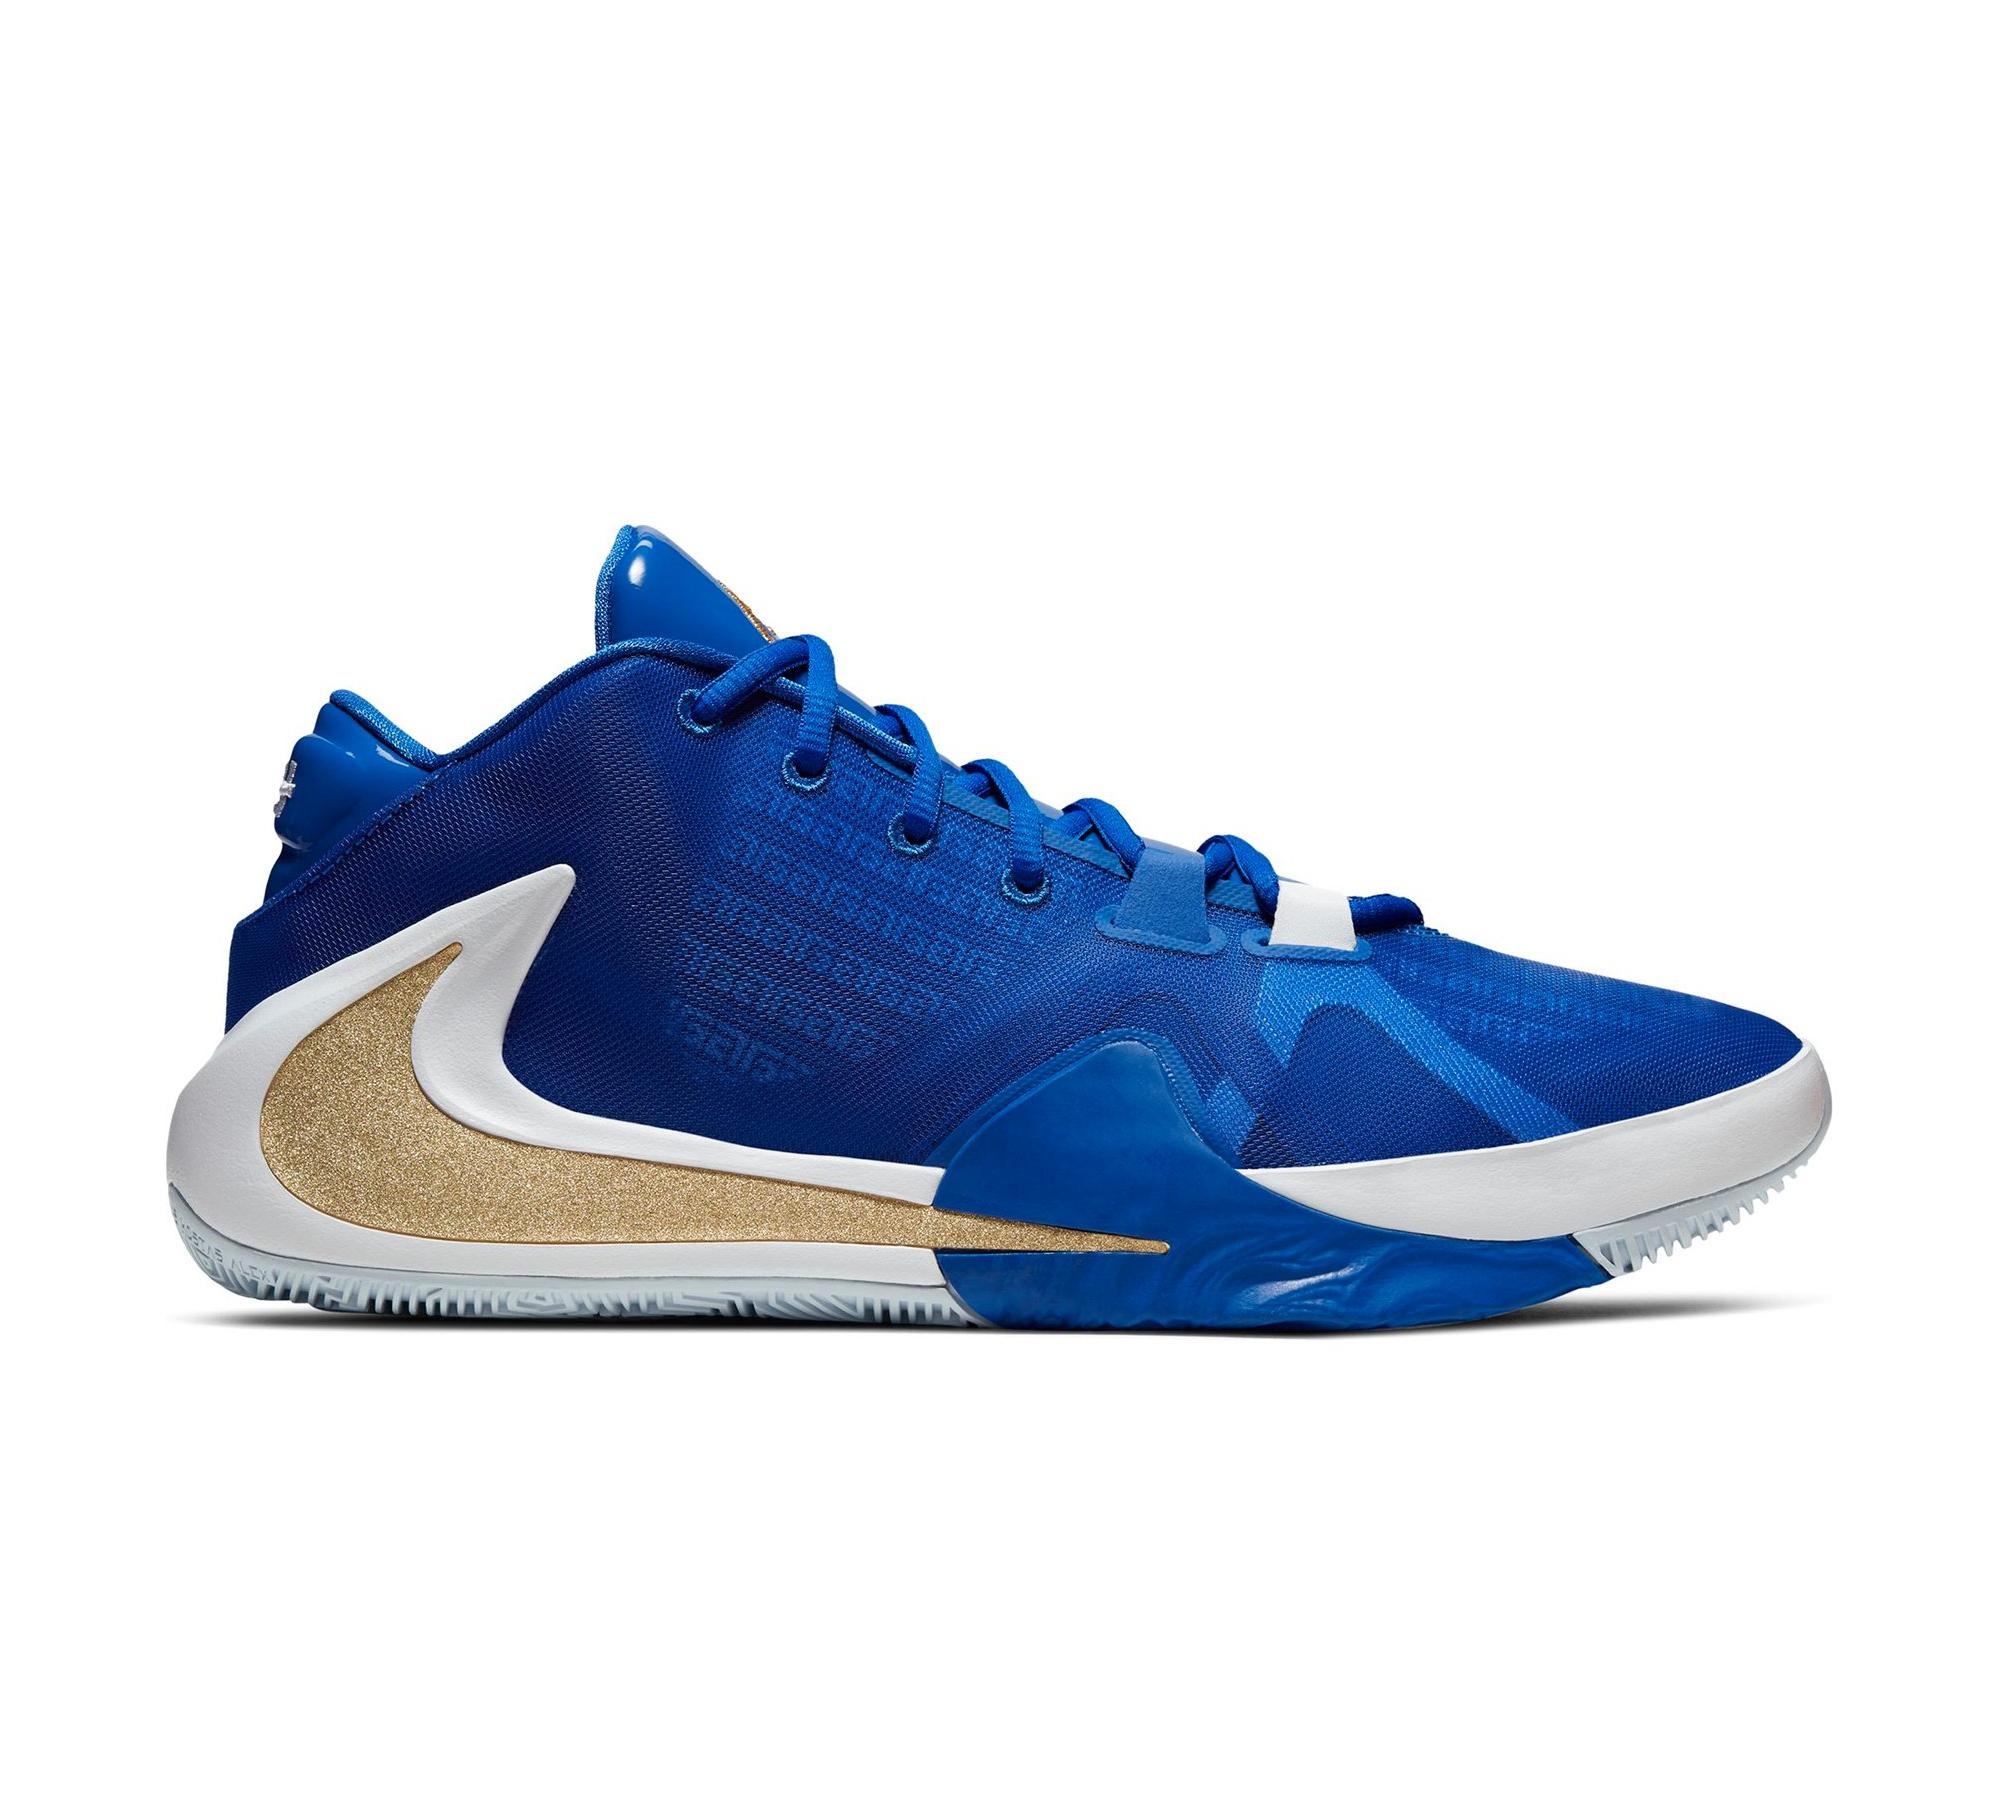 Sneakers Release : Nike Zoom Freak 1 “Hyper Royal/Metallic Gold”